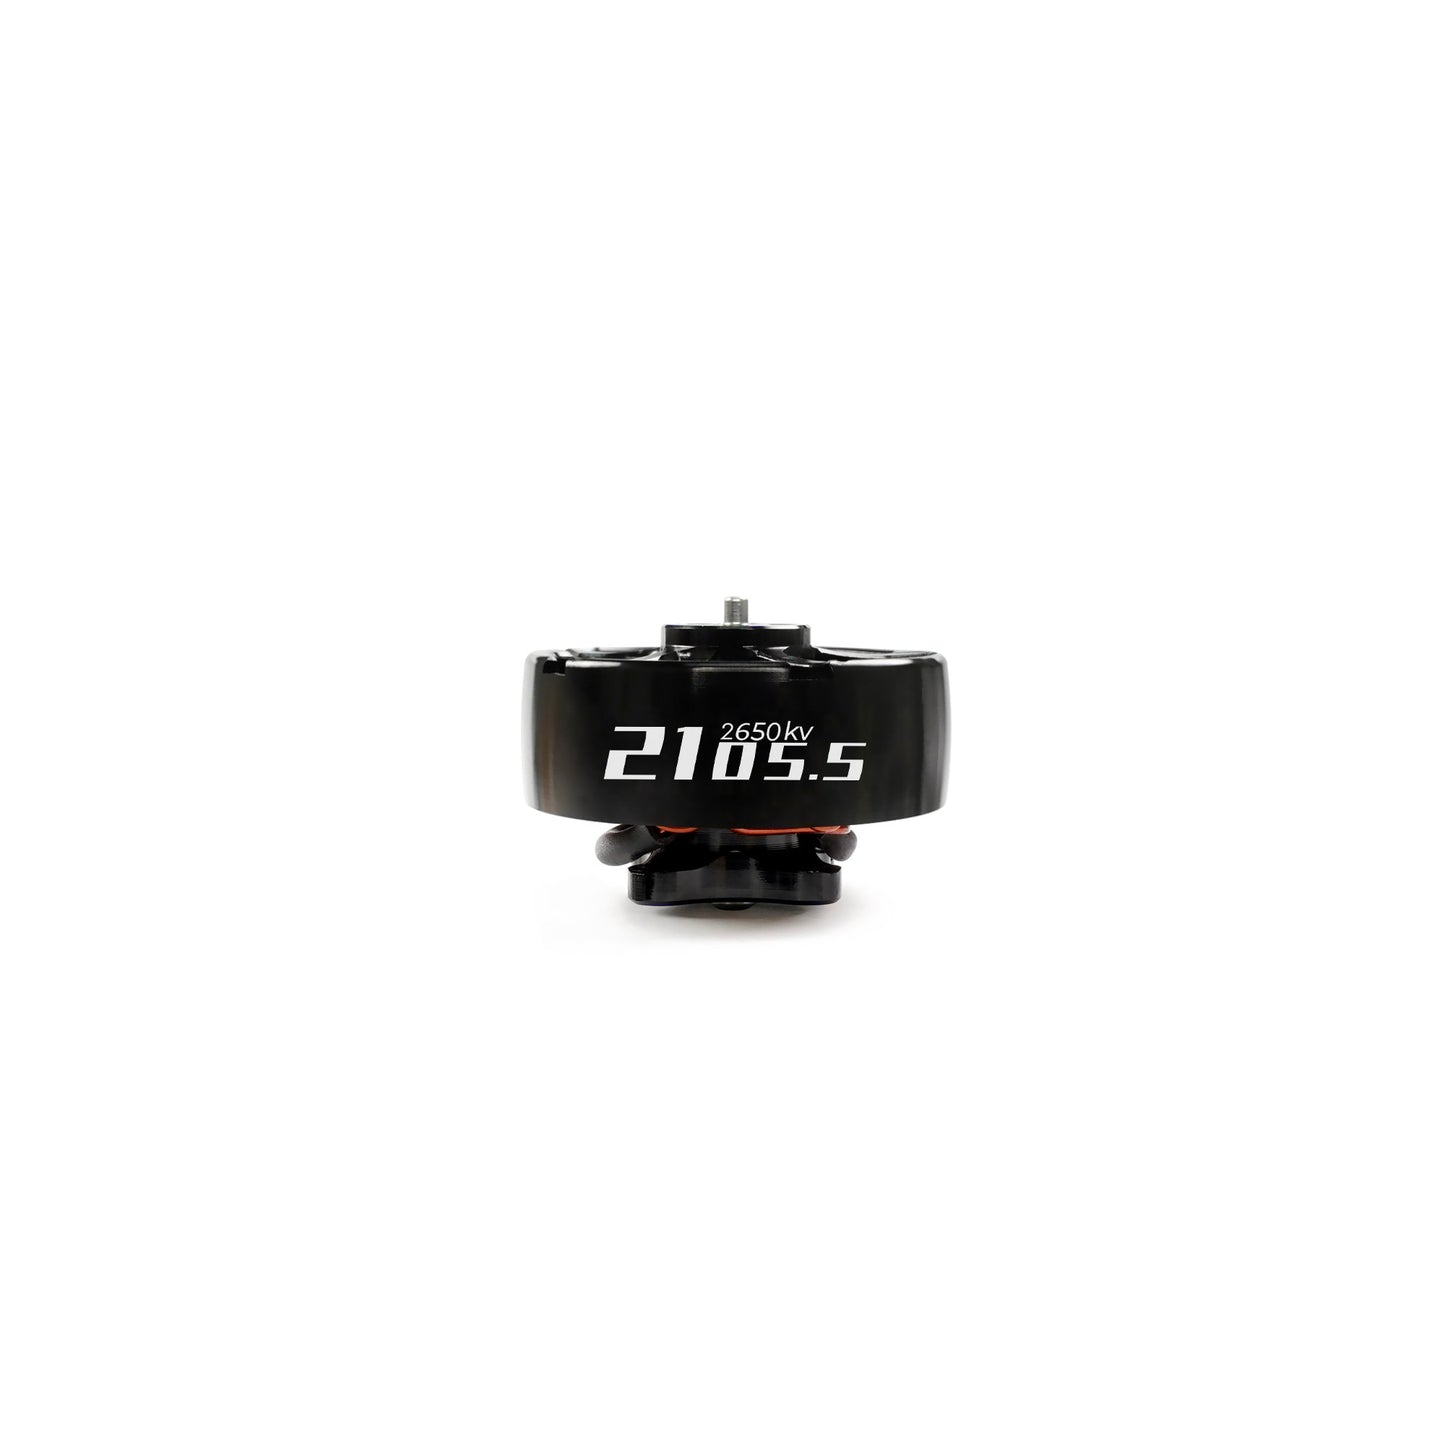 GEPRC SPEEDX2 2105.5 2650KV Motor (Black)